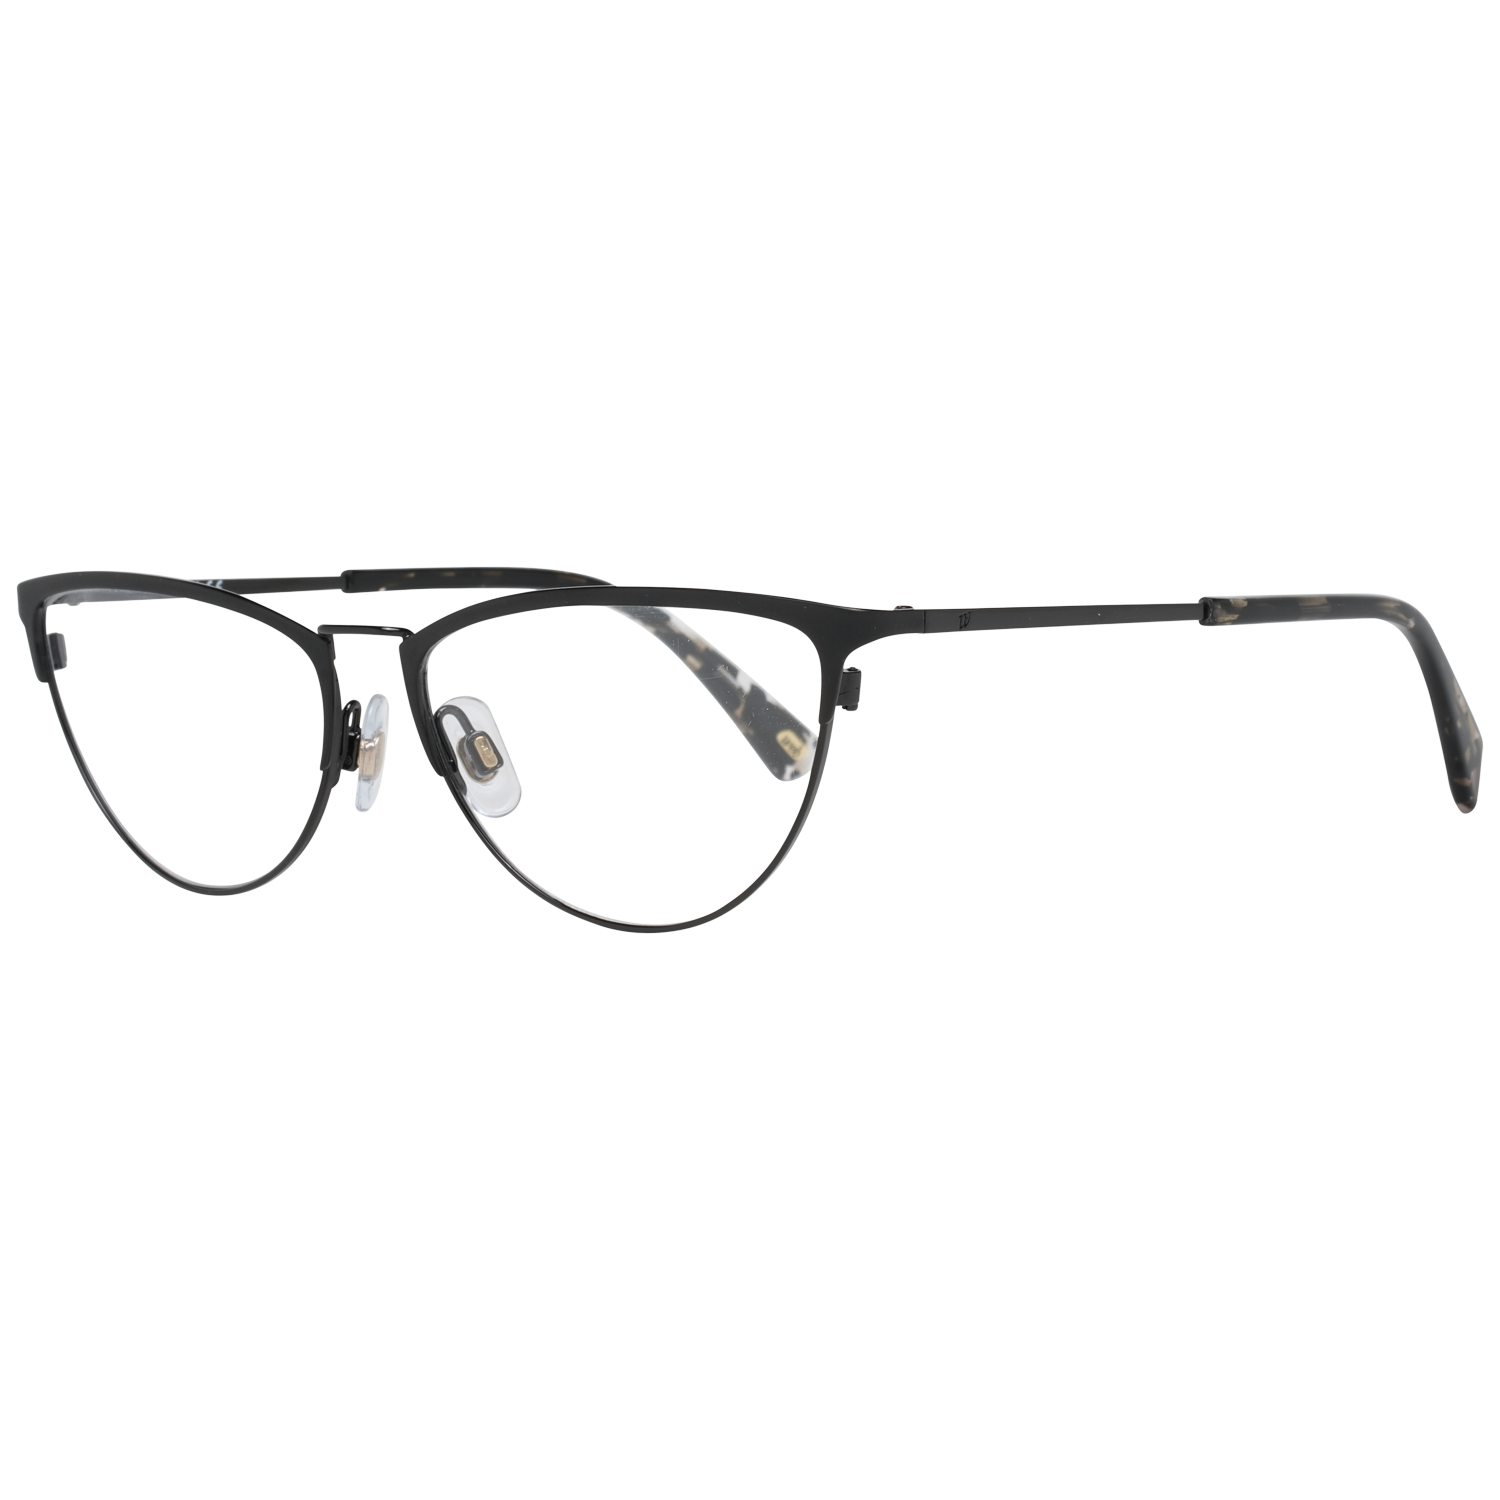 Web Frames Web Prescription Glasses Optical Frame WE5304 001 54 Eyeglasses Eyewear UK USA Australia 